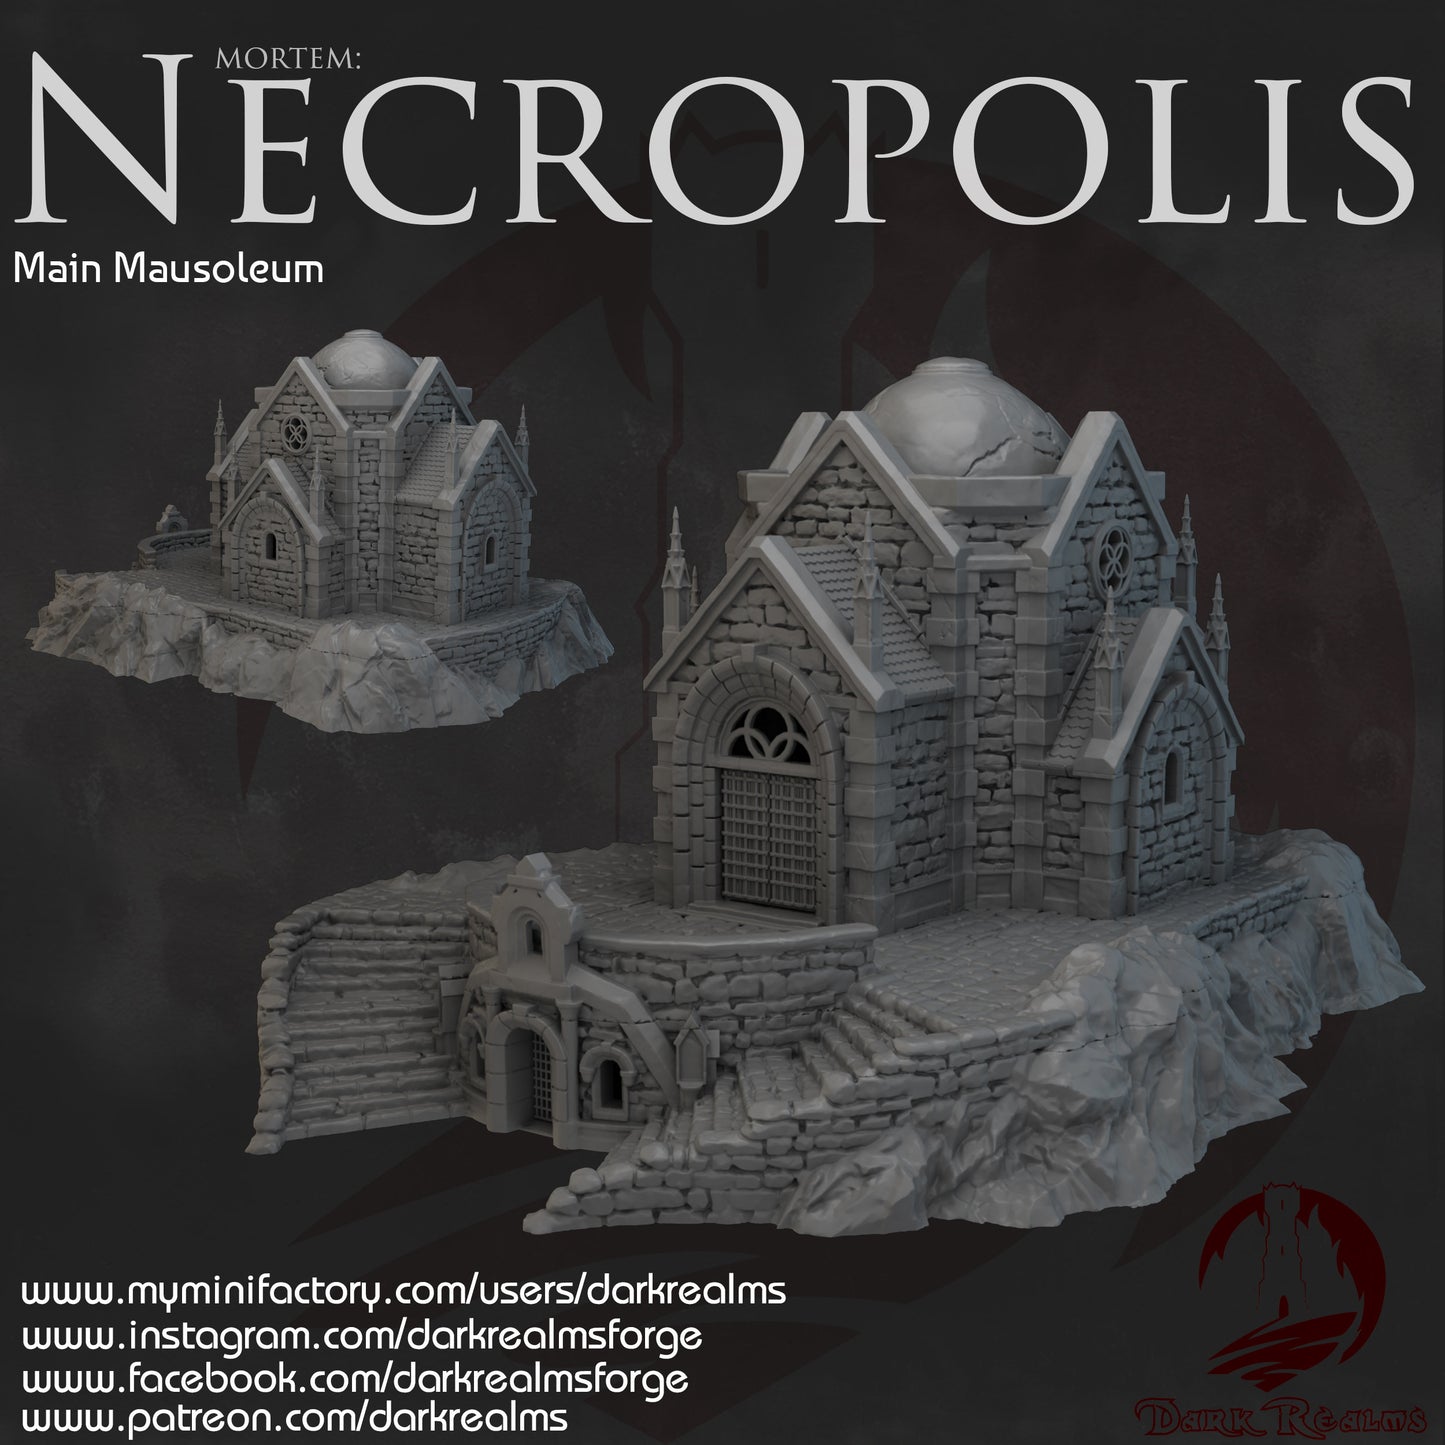 Mortem Main Mausoleum, Necropolis Series, Mausoleum, Tabletop Terrain, dungeons and Dragons, 28mm scale